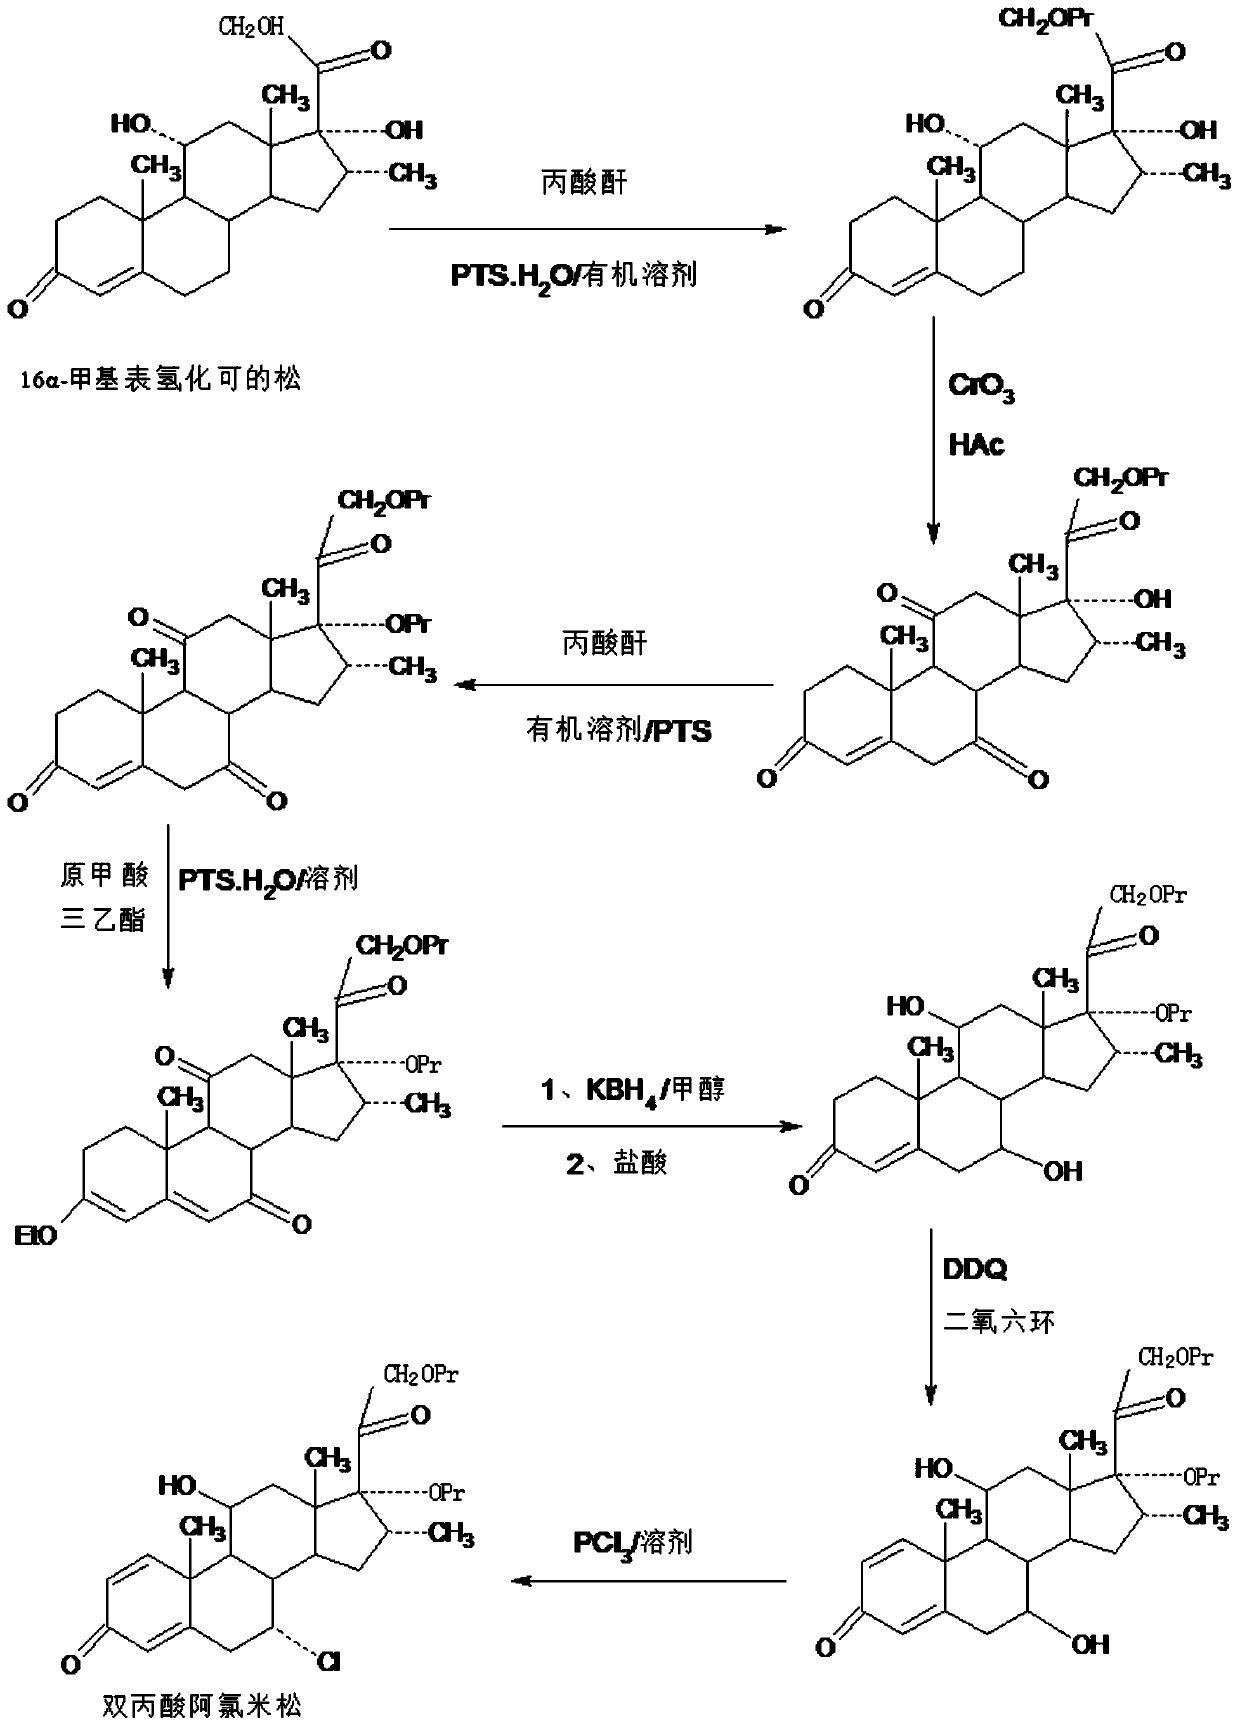 Method for preparing alclometasone dipropionate by using etherified intermediate